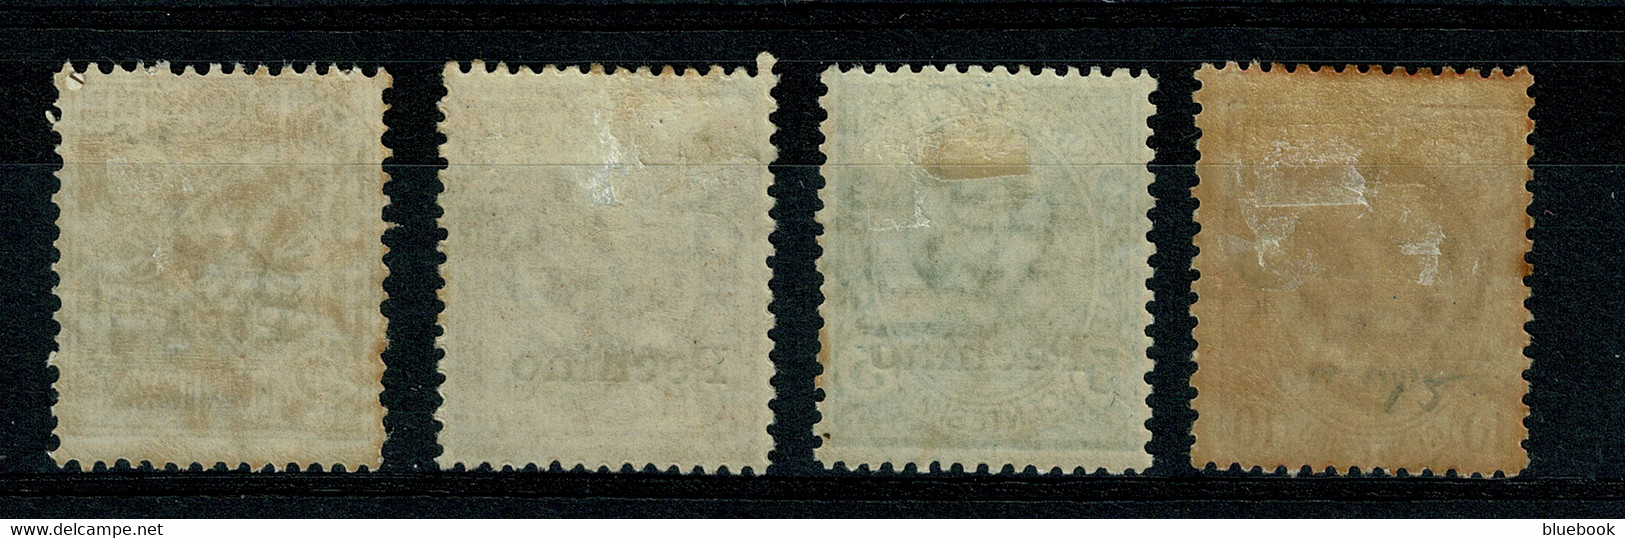 Ref 1542 -  Italy Post Offices - Pechino China 1917 - 1918  1c - 10c Mint Stamps. Sass. 8-11 Cat €188 - Peking